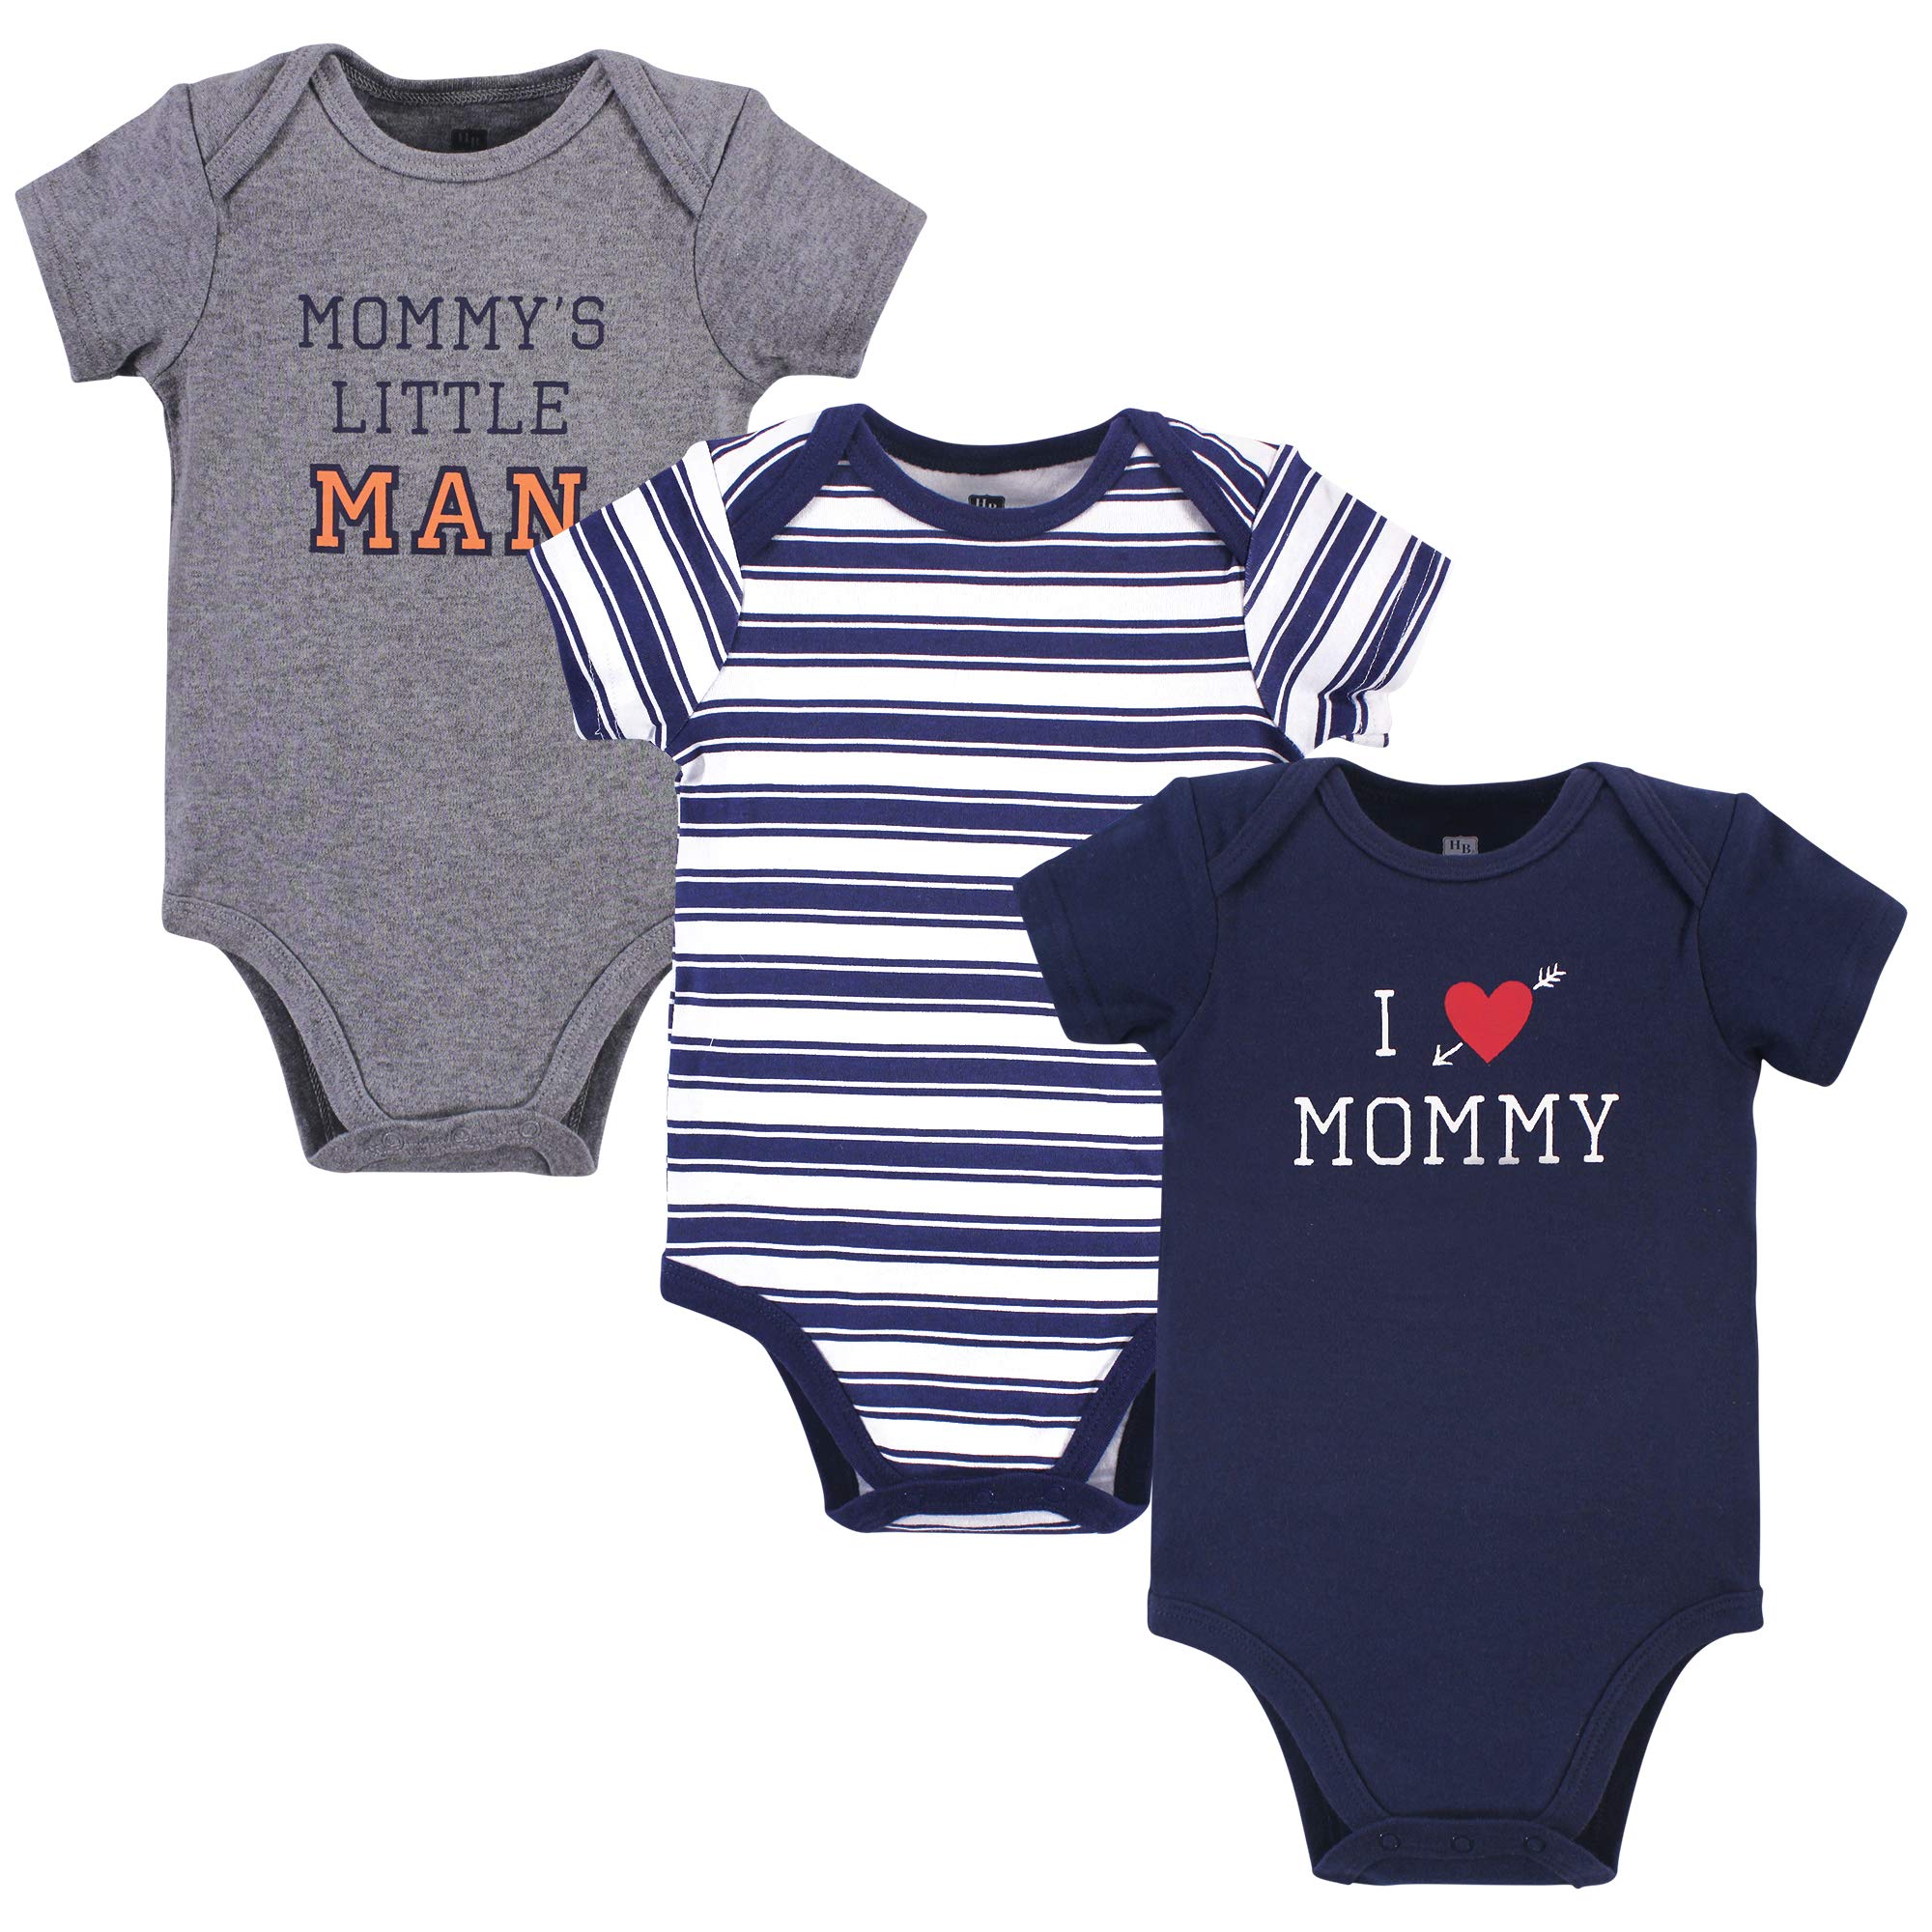 Hudson Baby unisex-baby Cotton Bodysuits